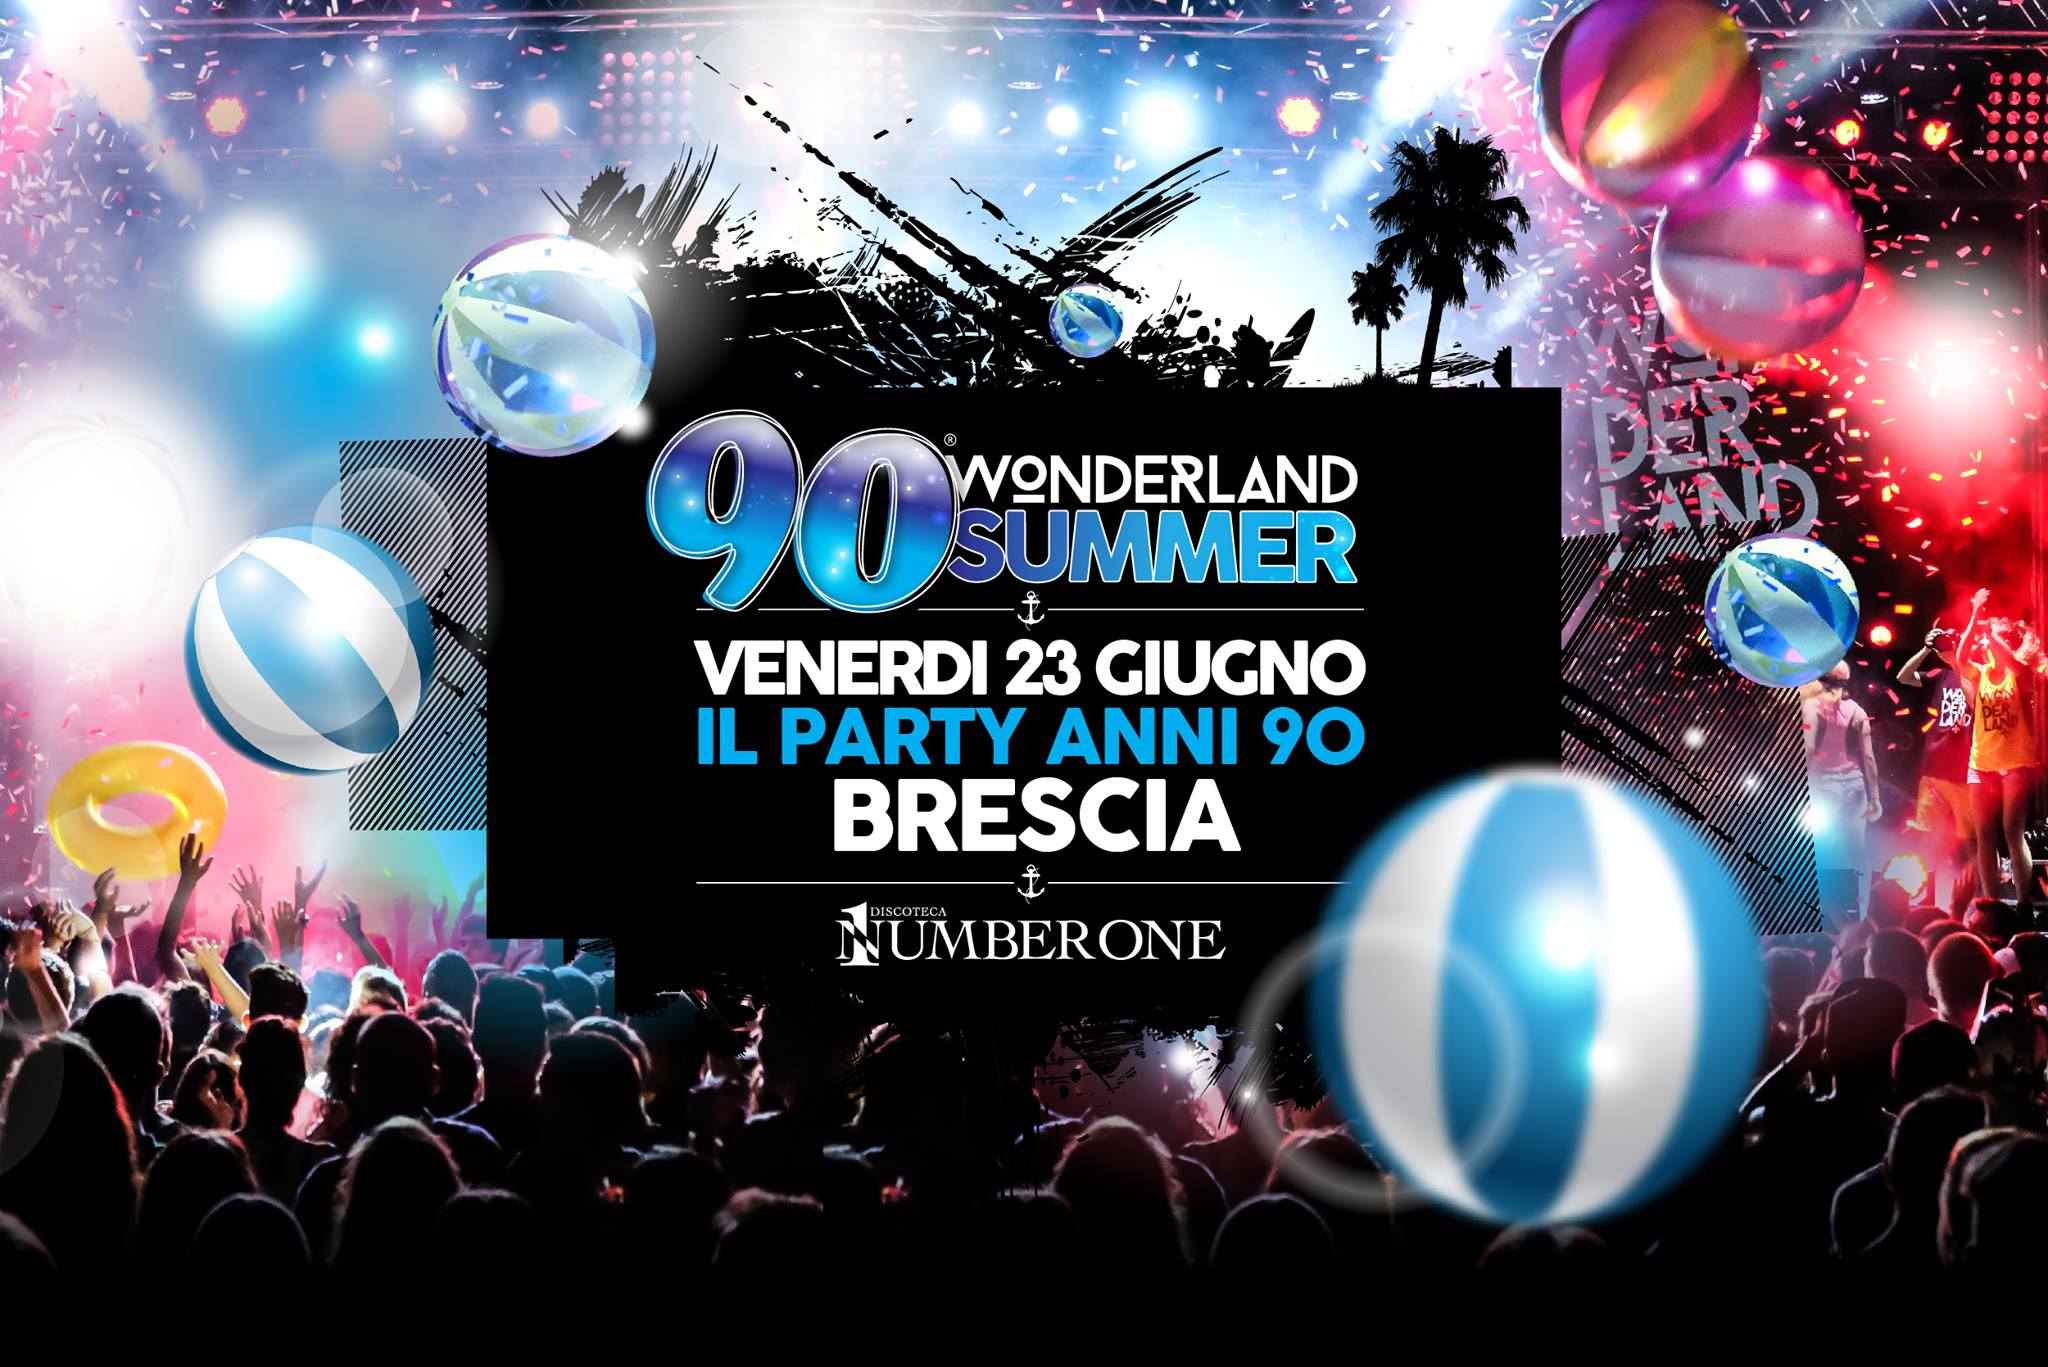 90 Wonderland Brescia